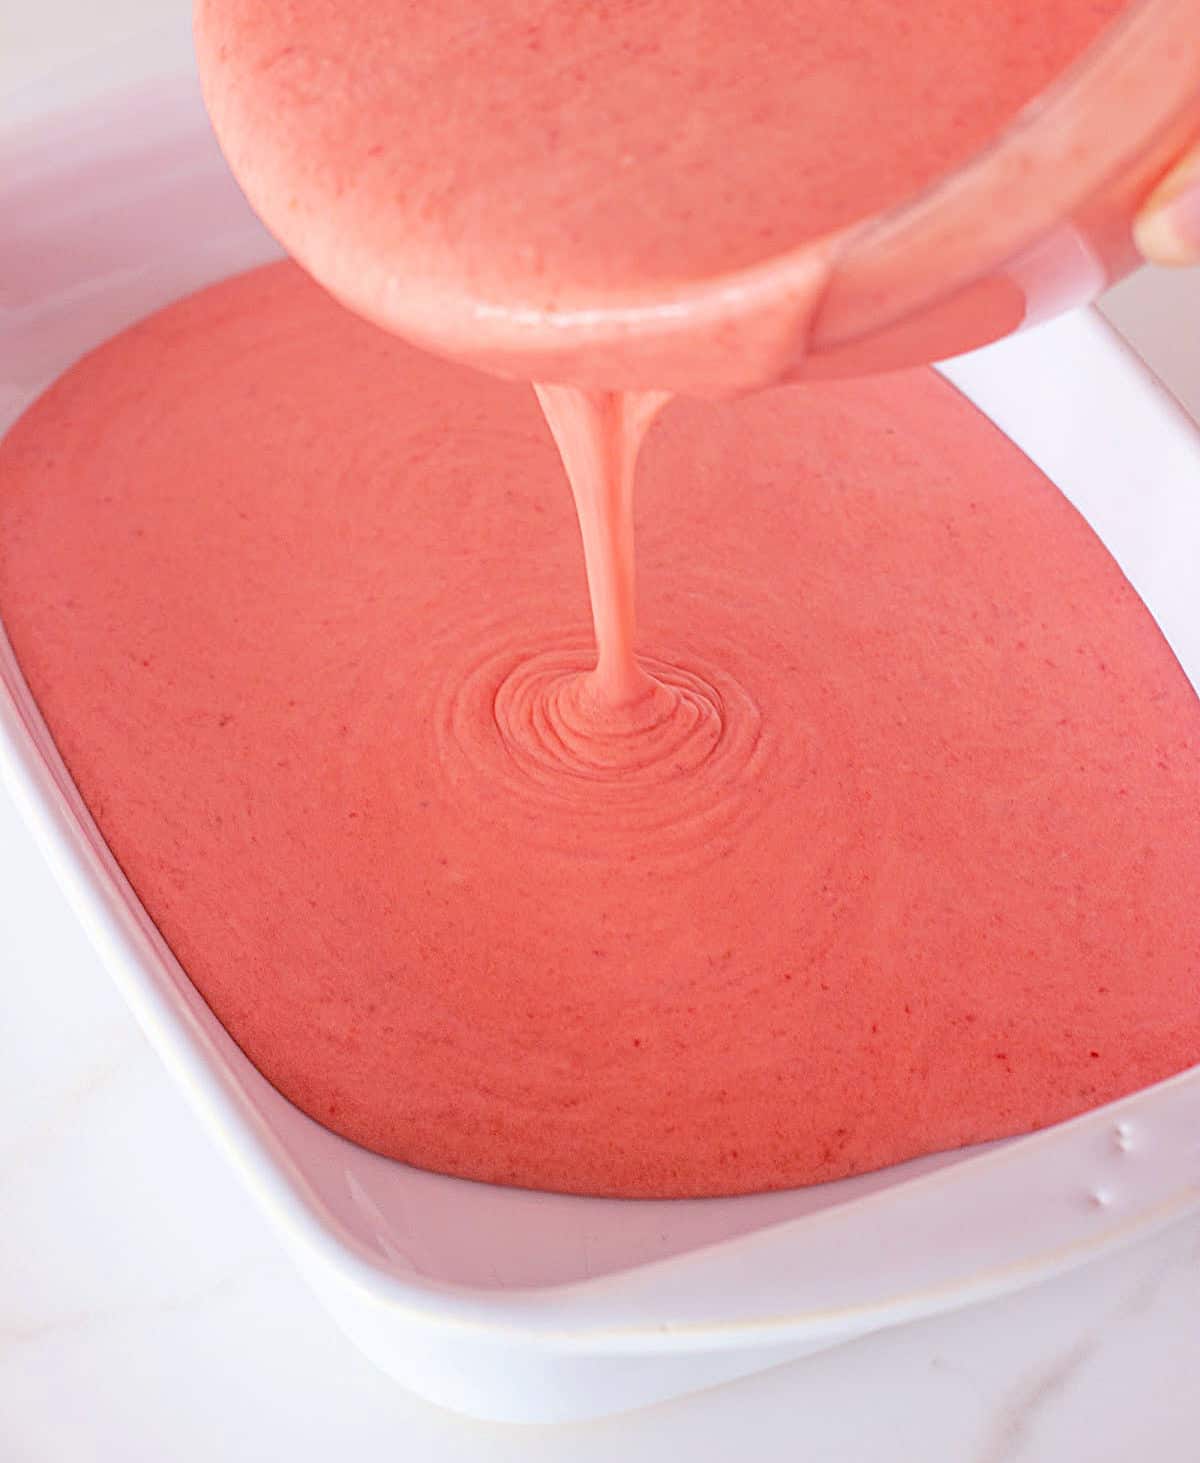 Pouring strawberry ice cream onto white ceramic shallow dish.